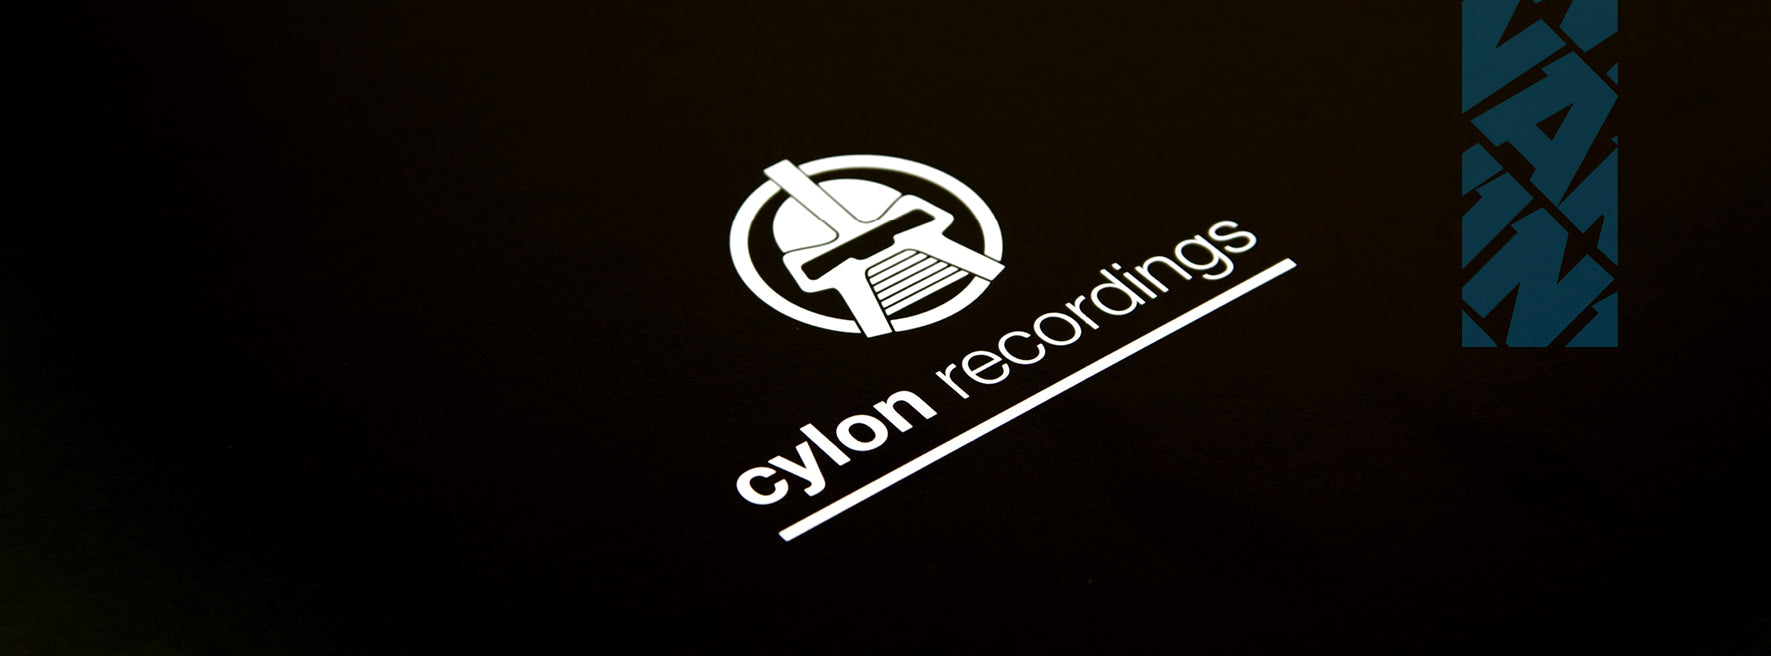 CYLON010 FB banner